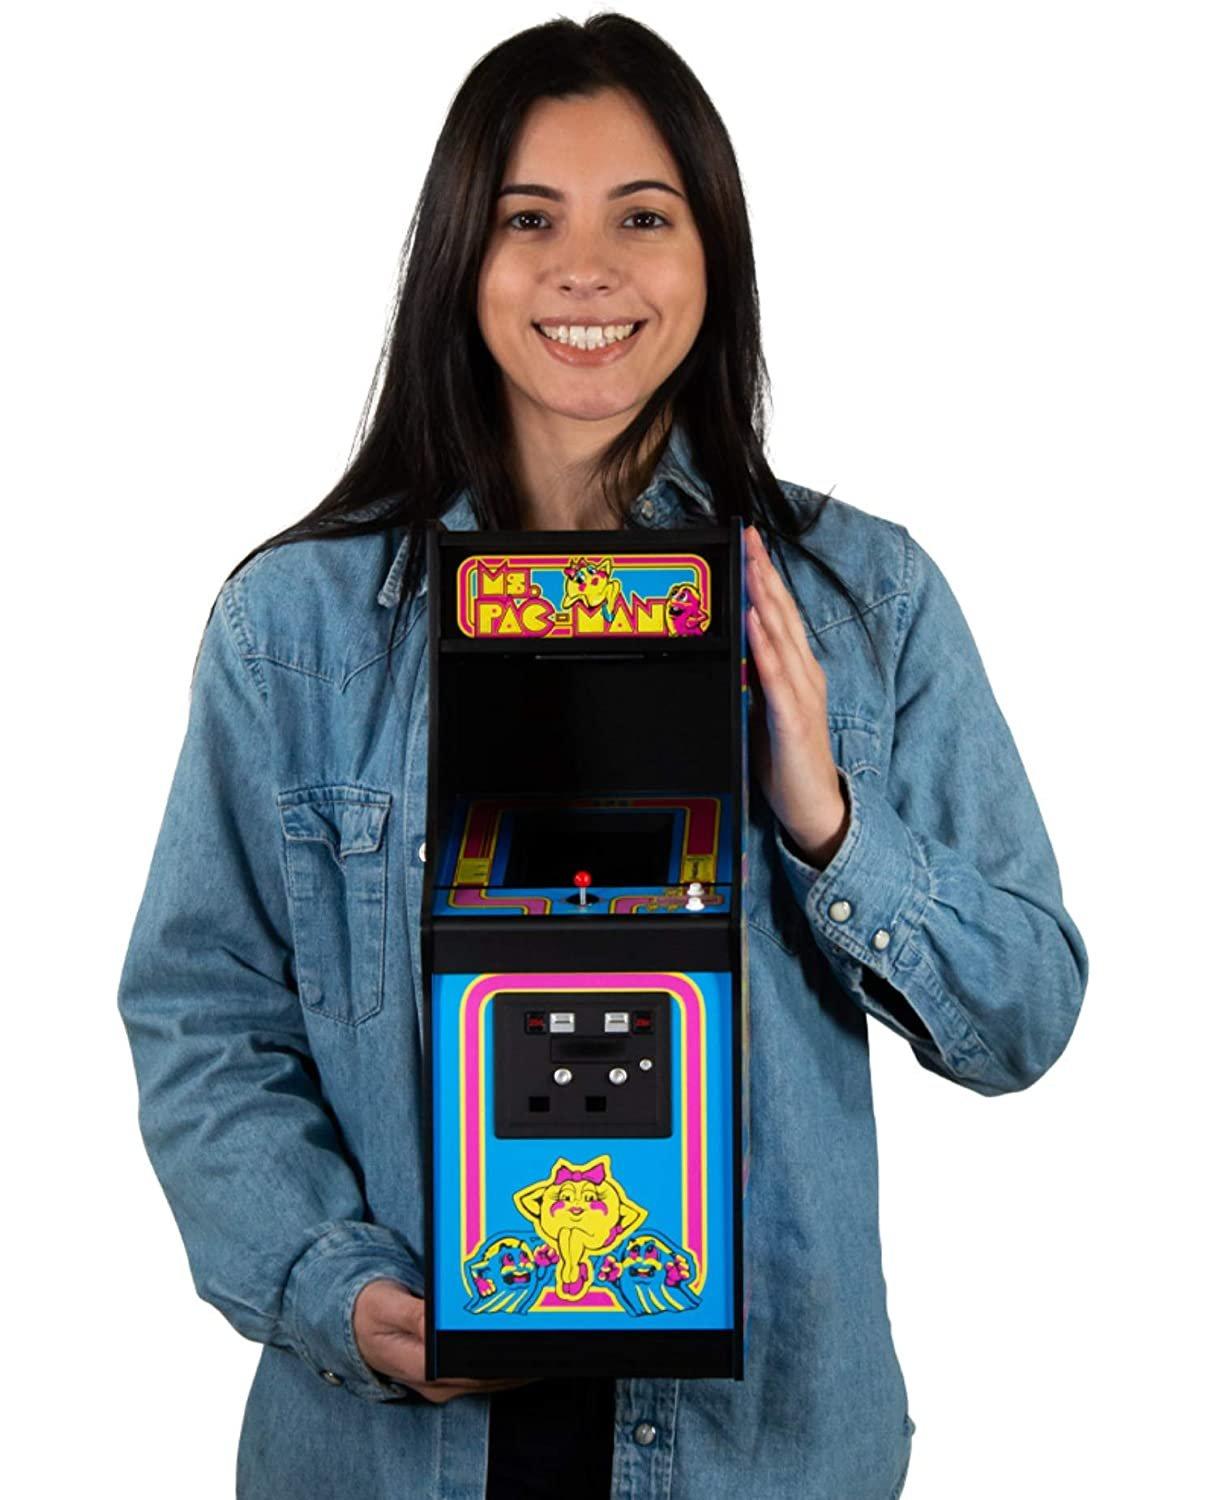 Ms. PAC-MAN Quarter Arcade Mini Cabinet